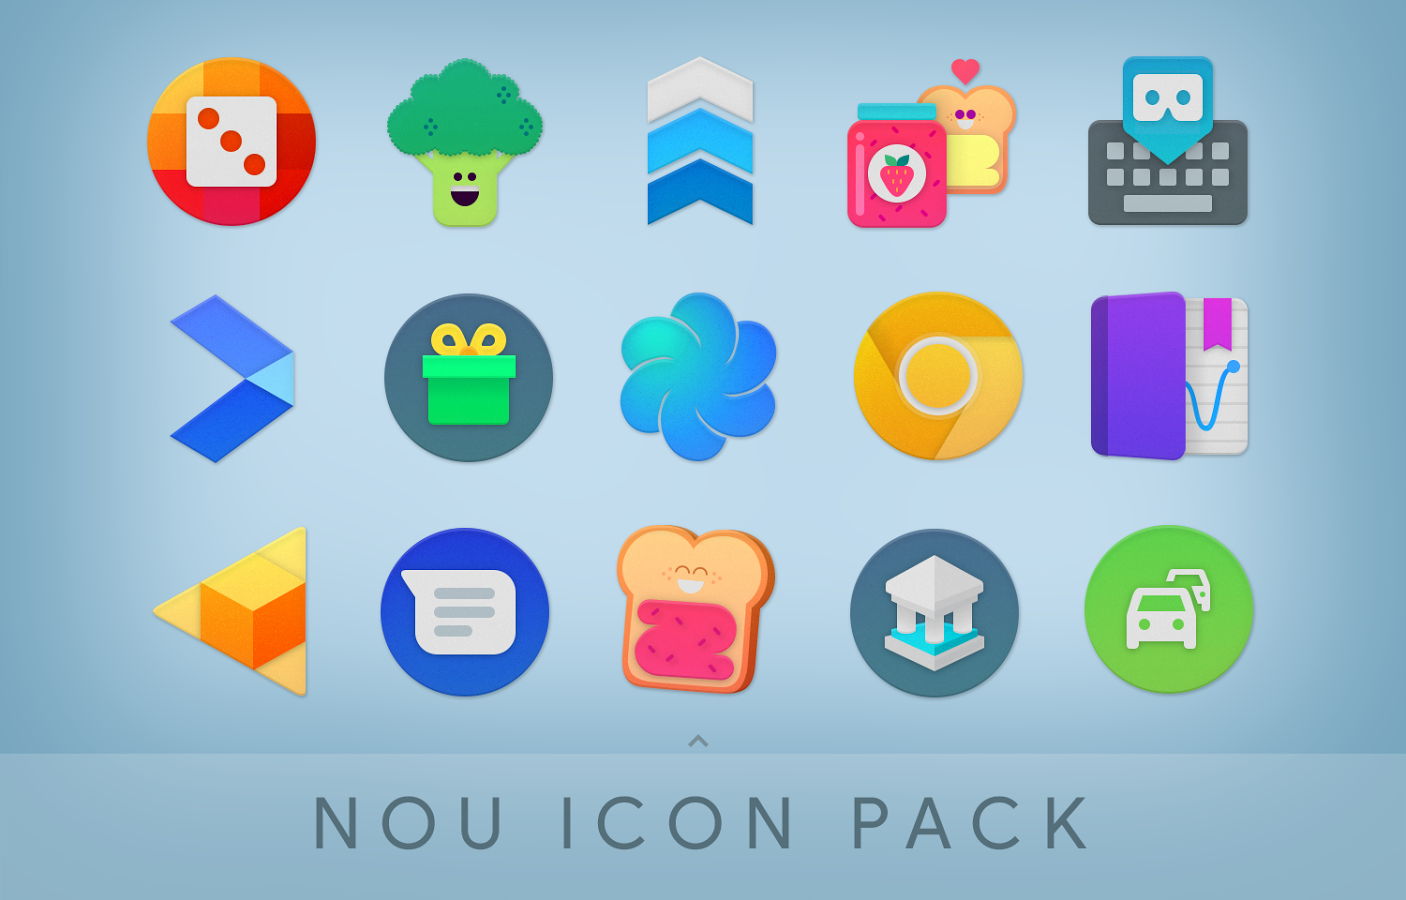 NOU - Icon Pack